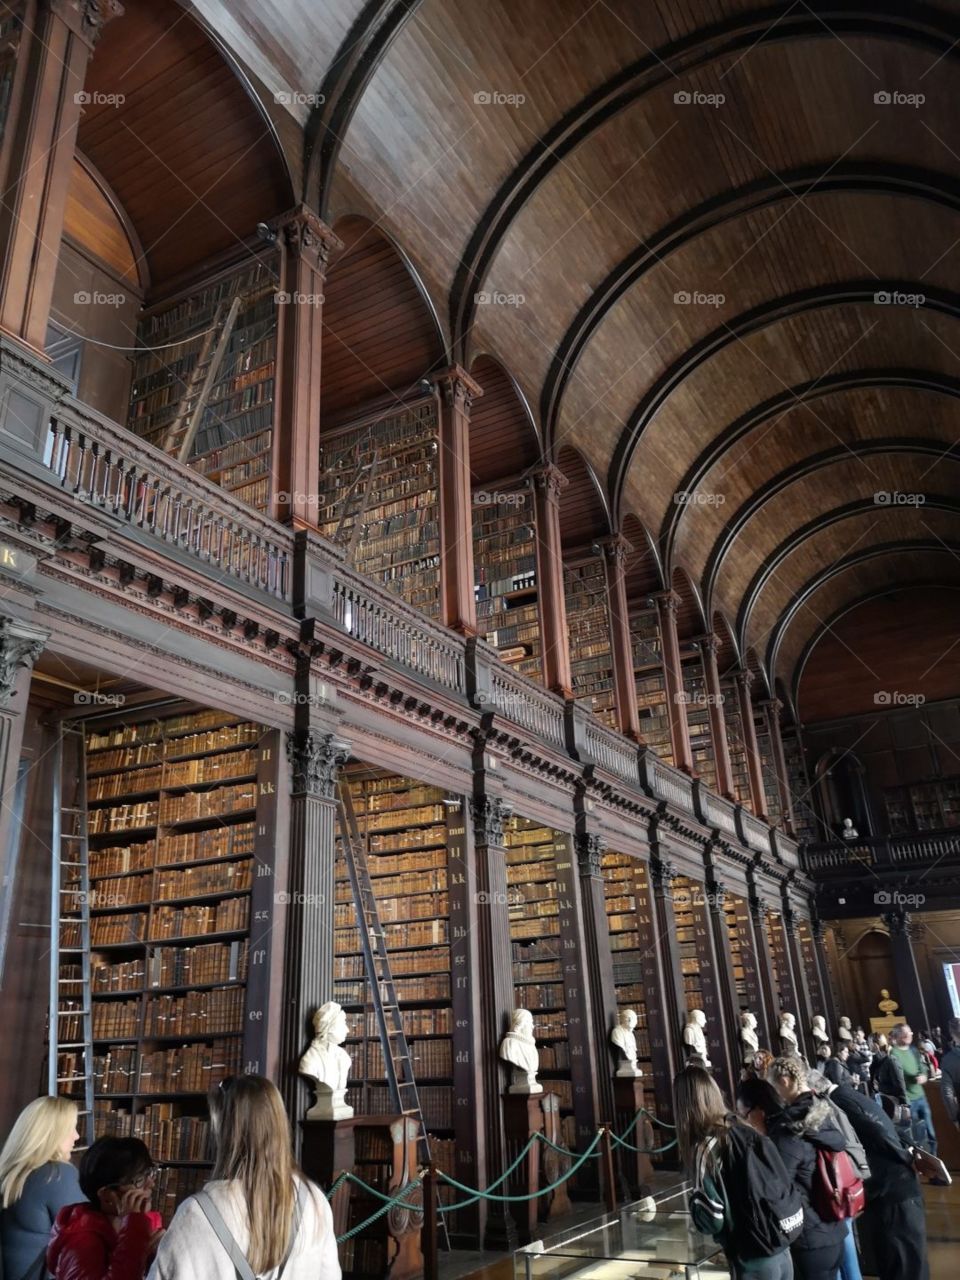 Library in Dublin